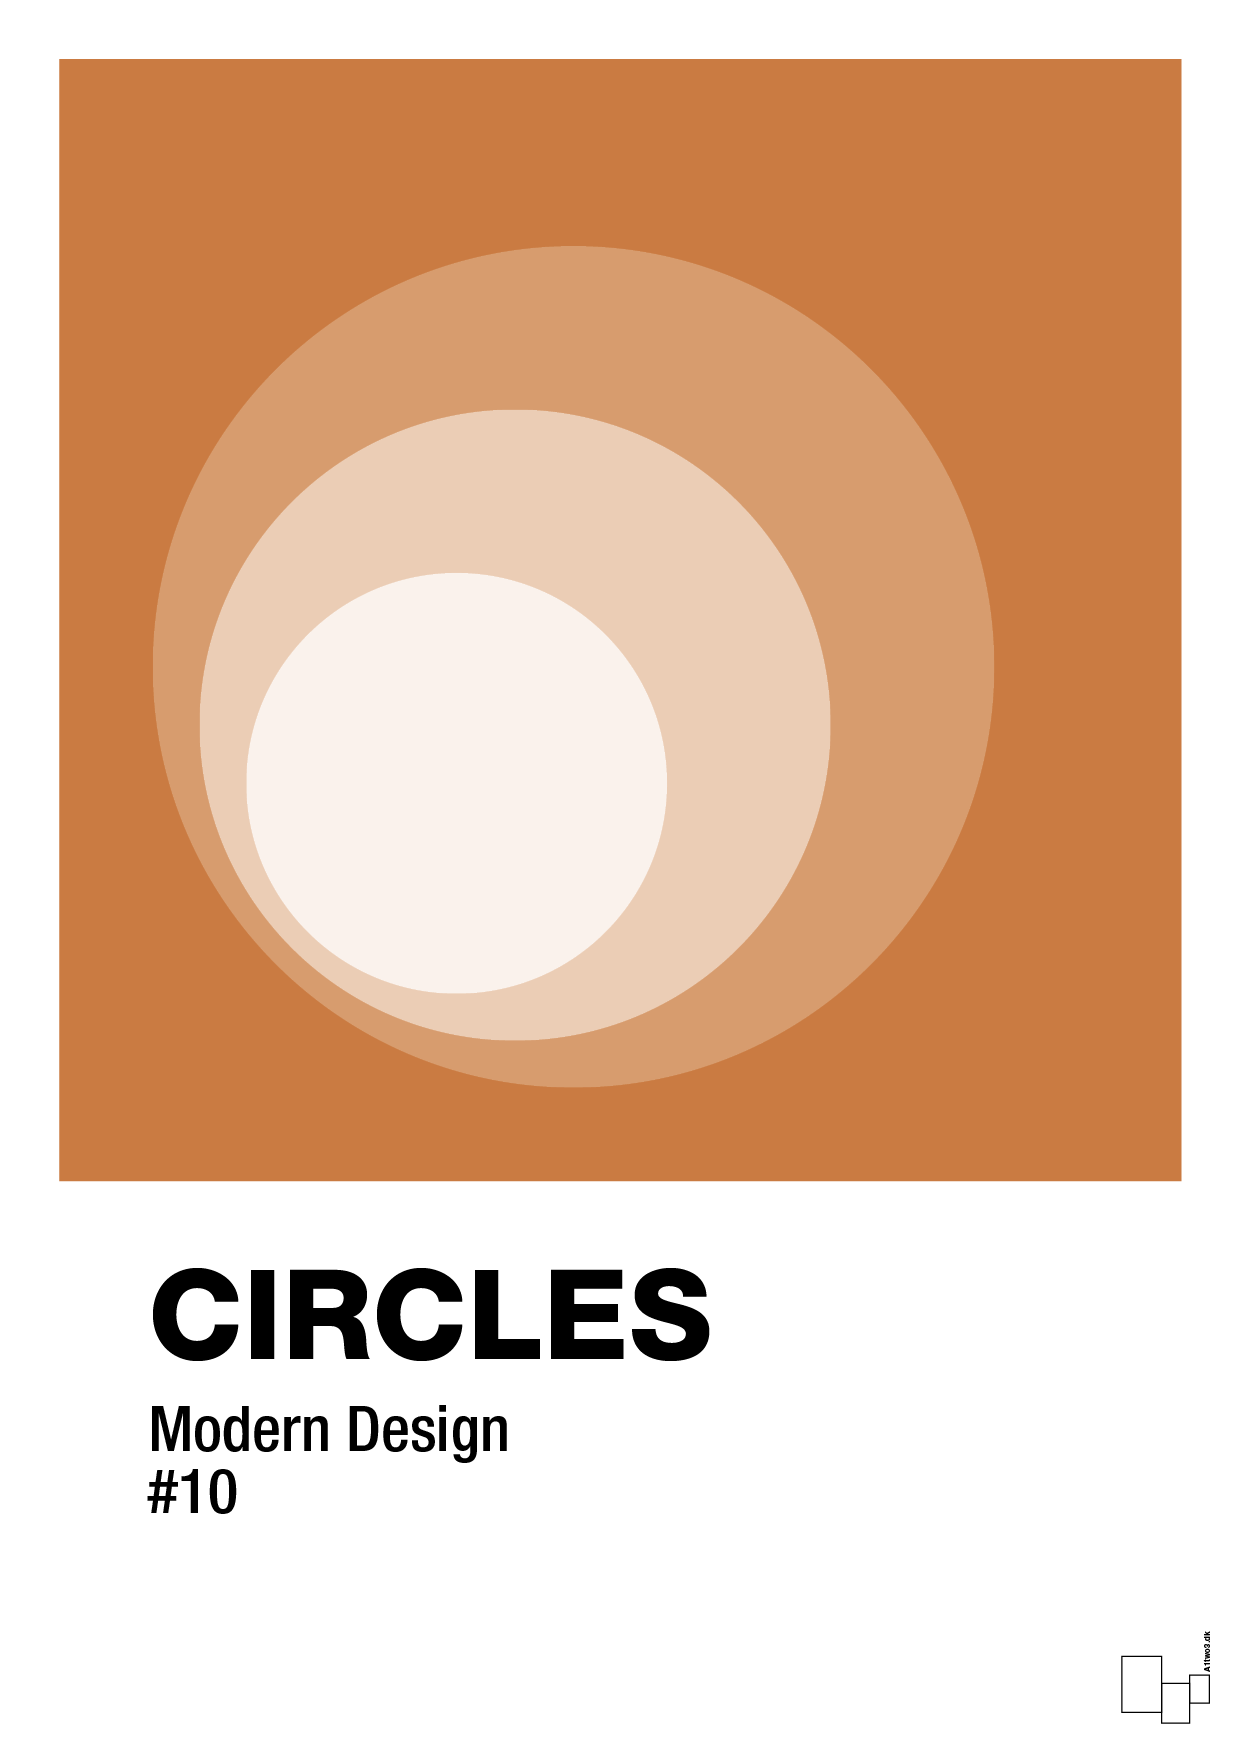 circles #10 - Plakat med Grafik i Rumba Orange